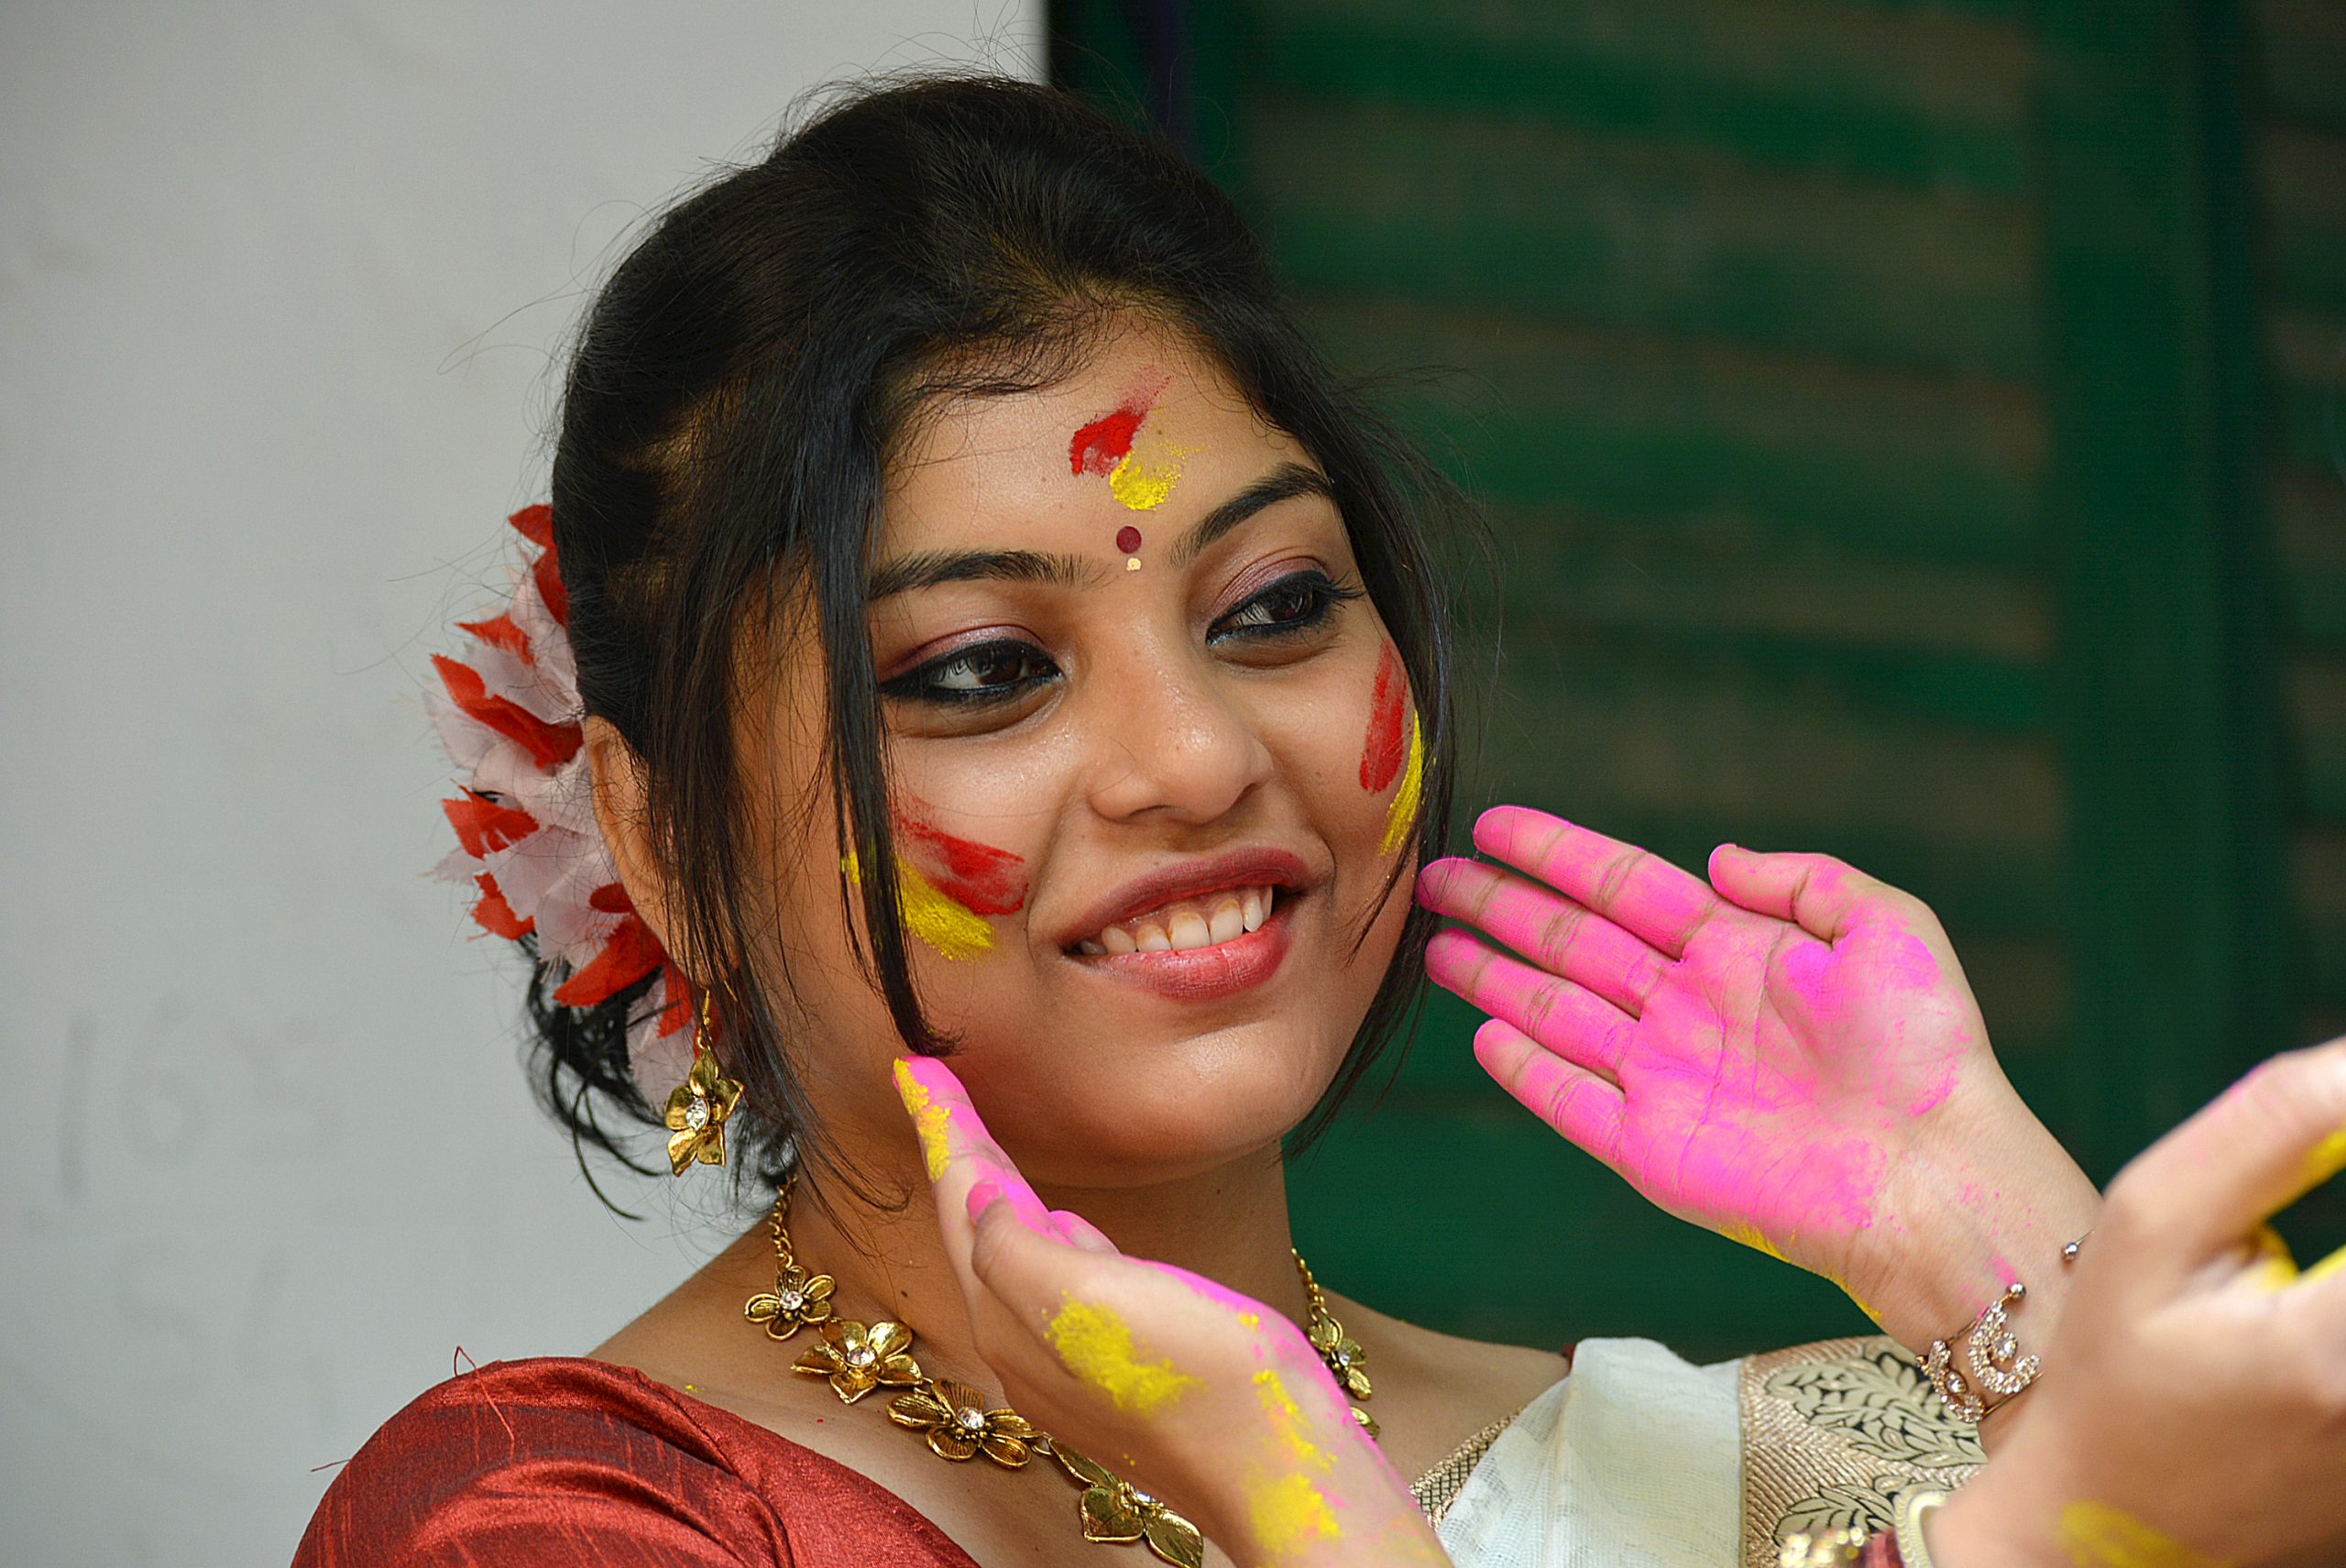 A woman celebrating holi festival